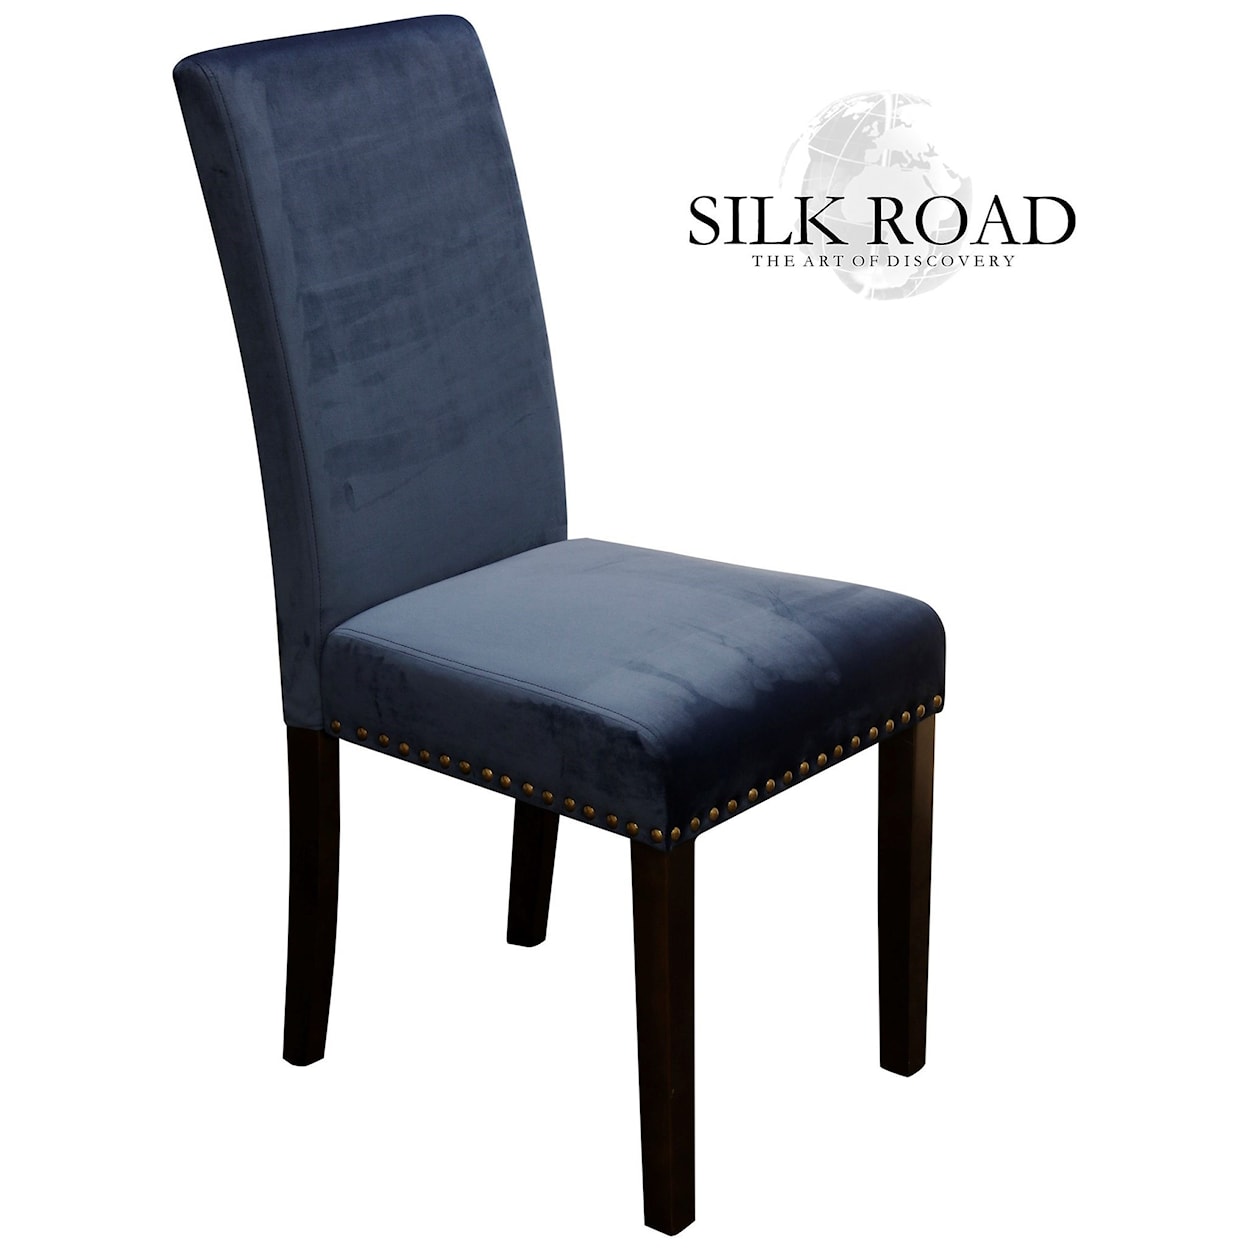 StyleCraft Silk Road Parson's Dining Chair with Nail Head Trim